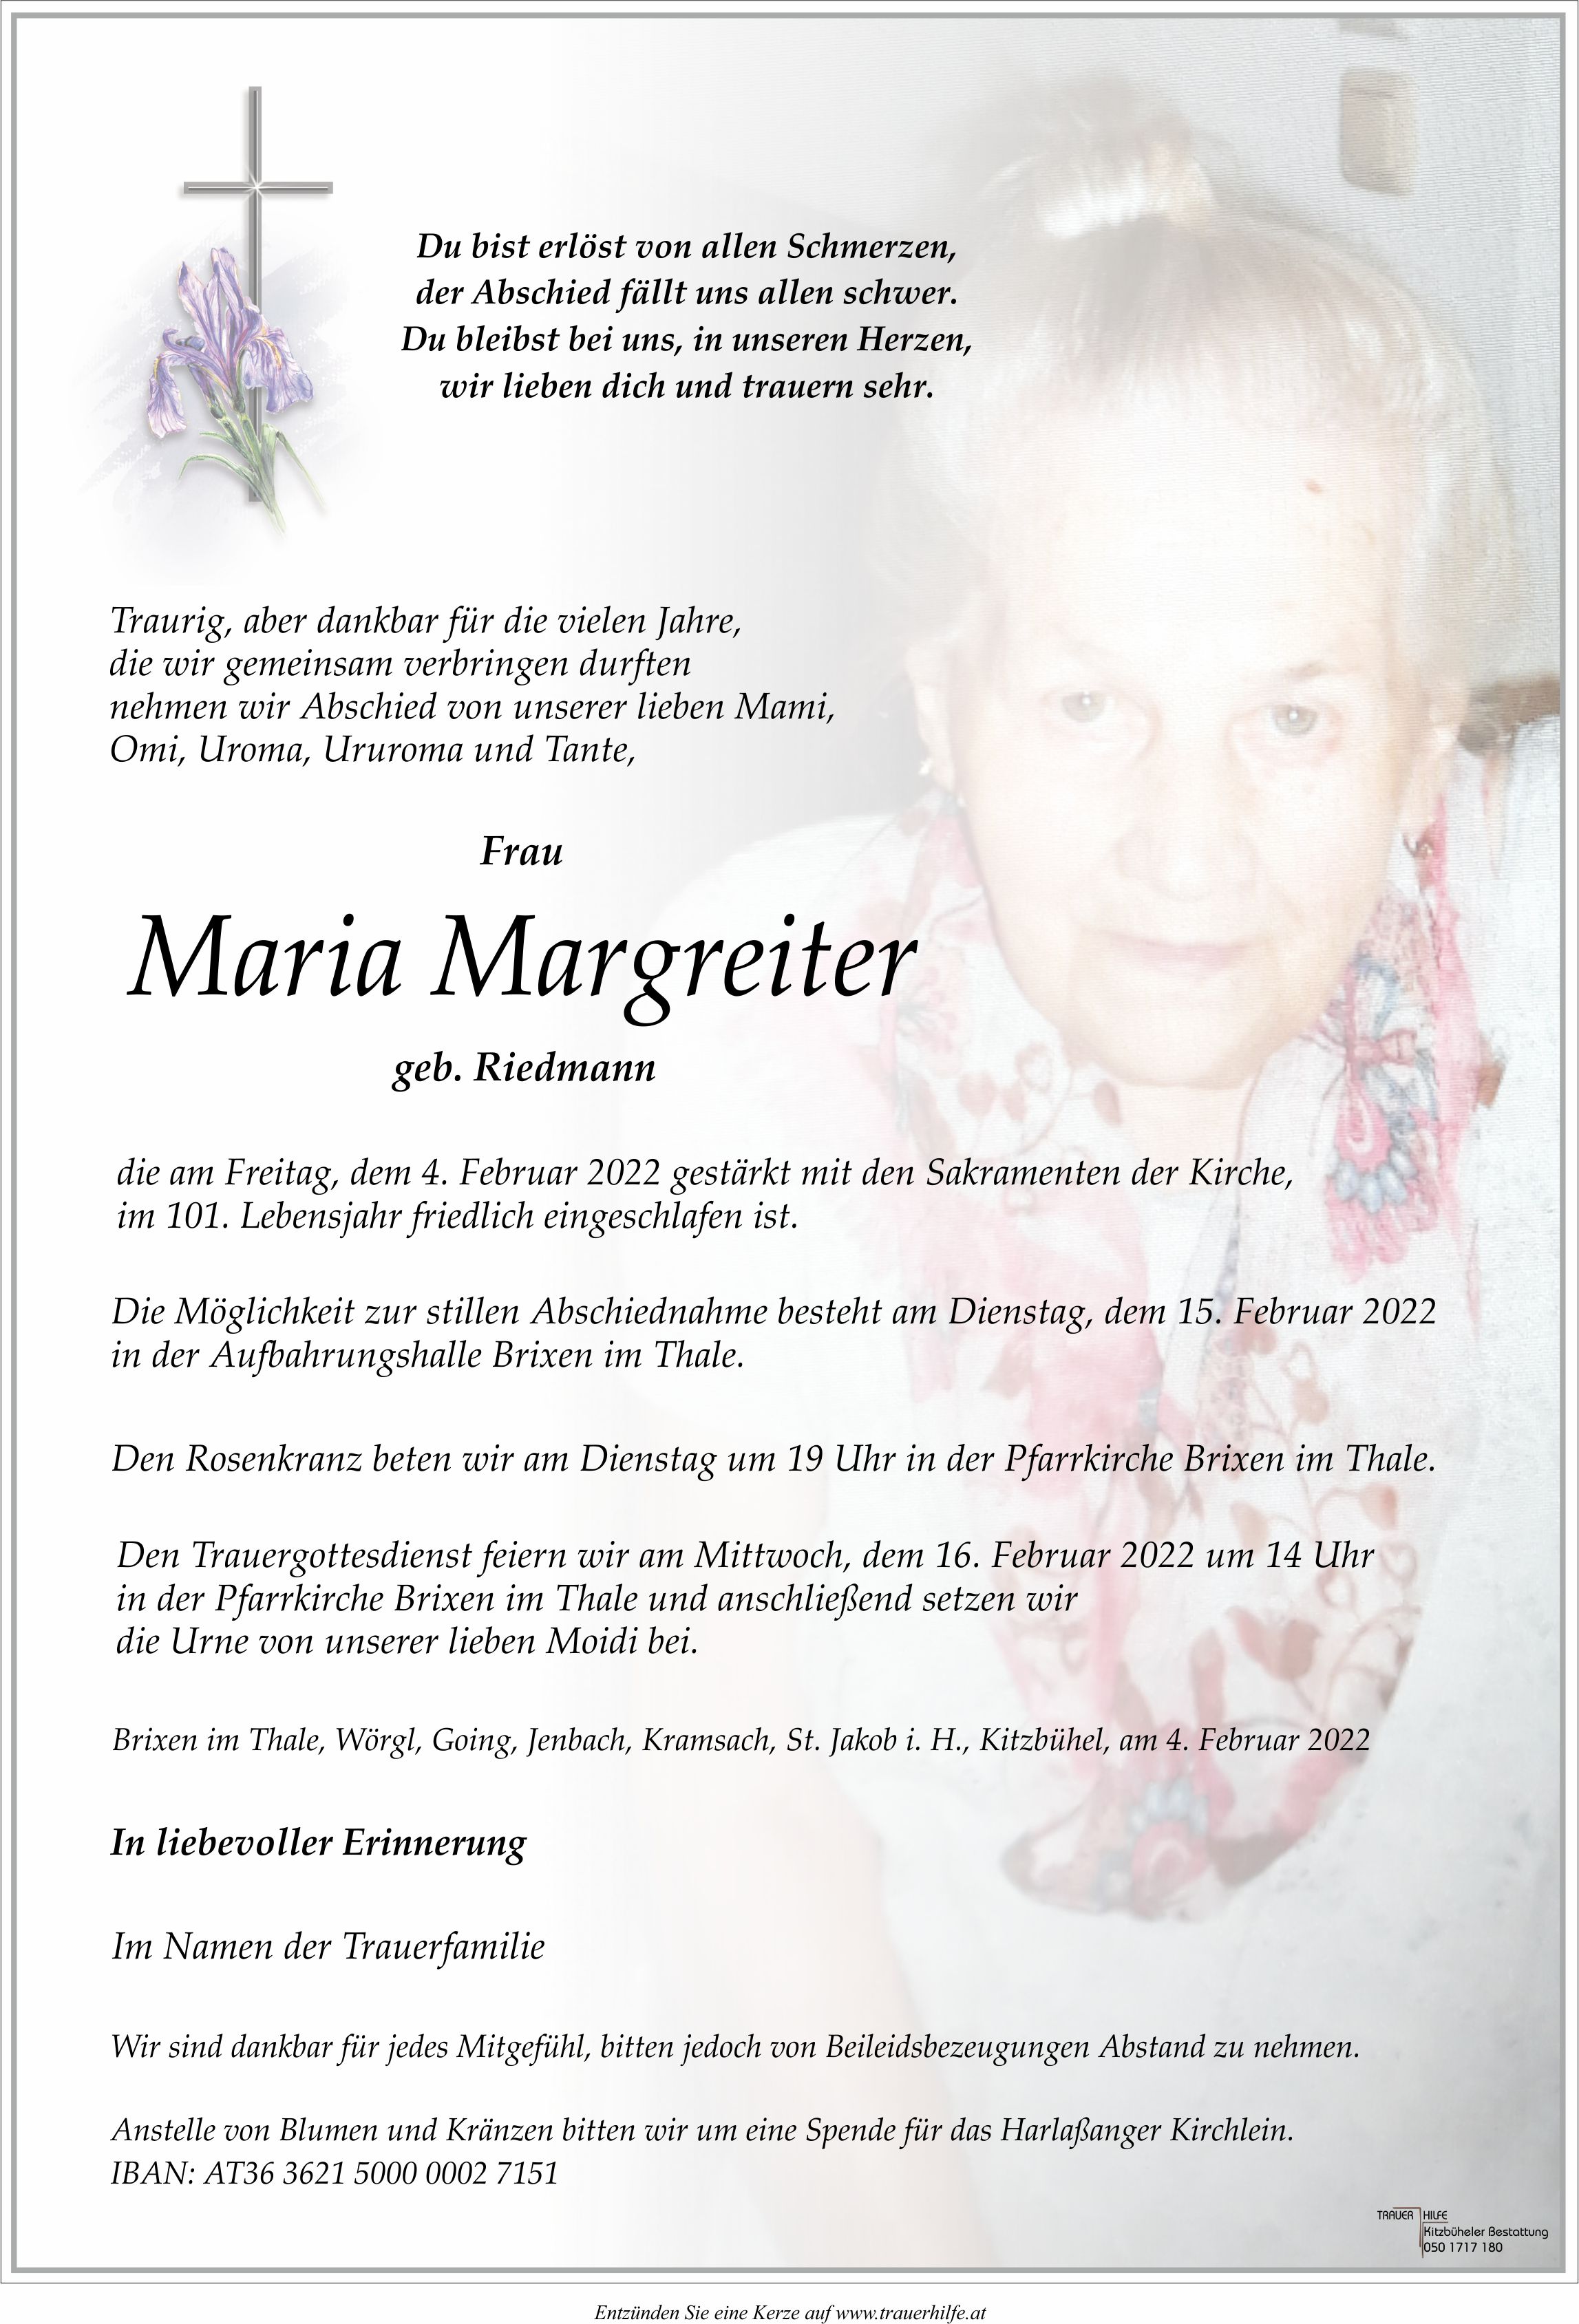 Maria Margreiter